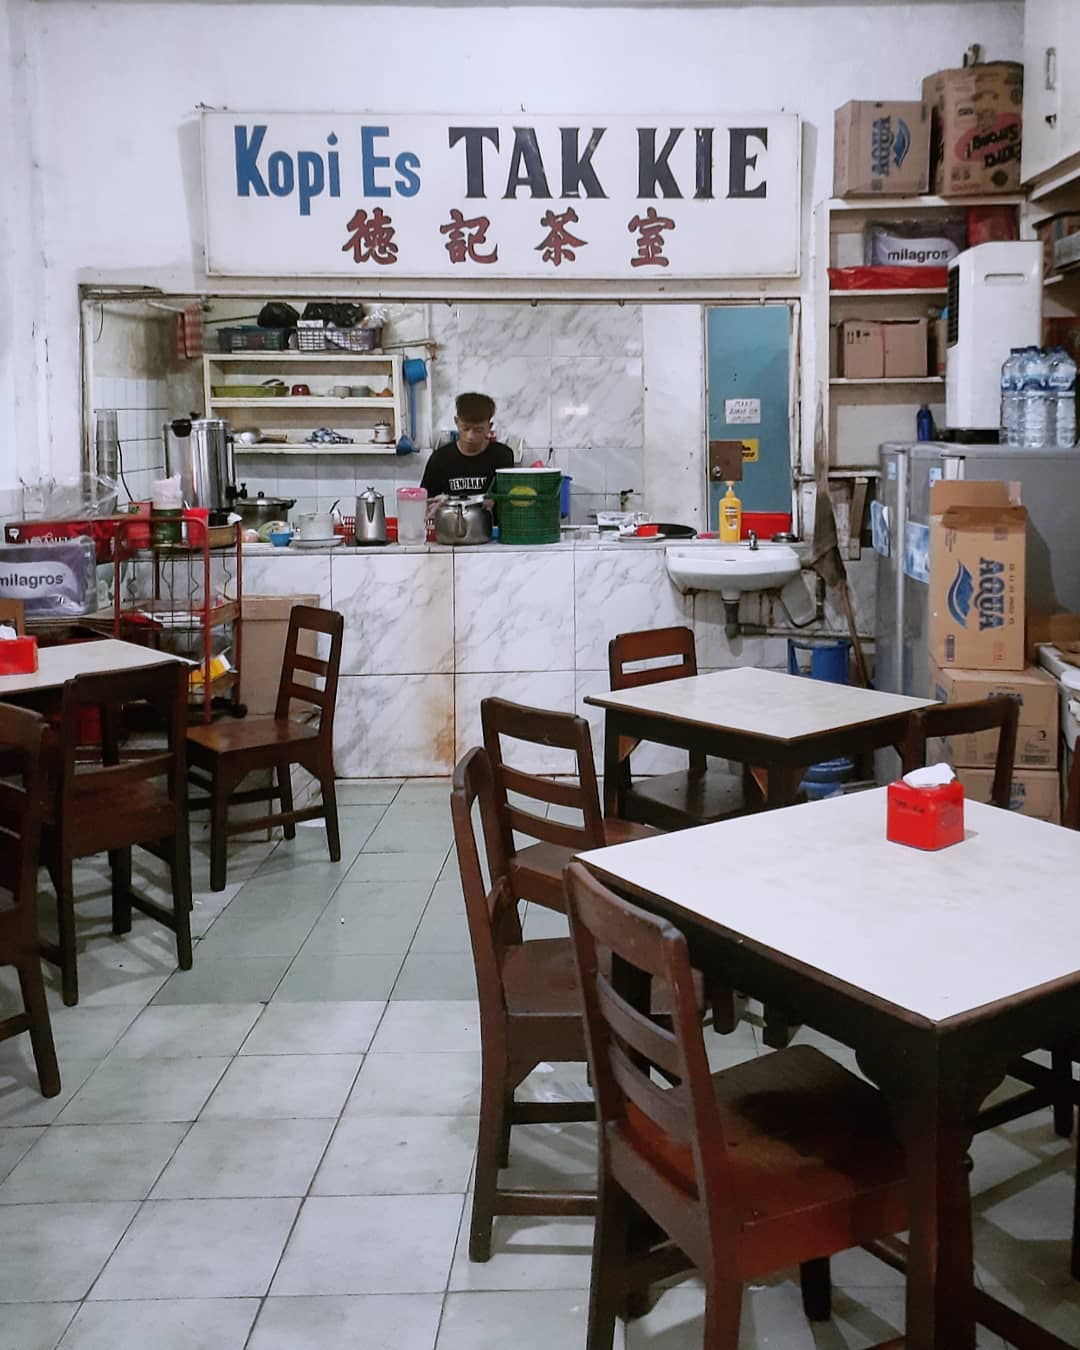 historic restaurants in jakarta - kopi es tak kie